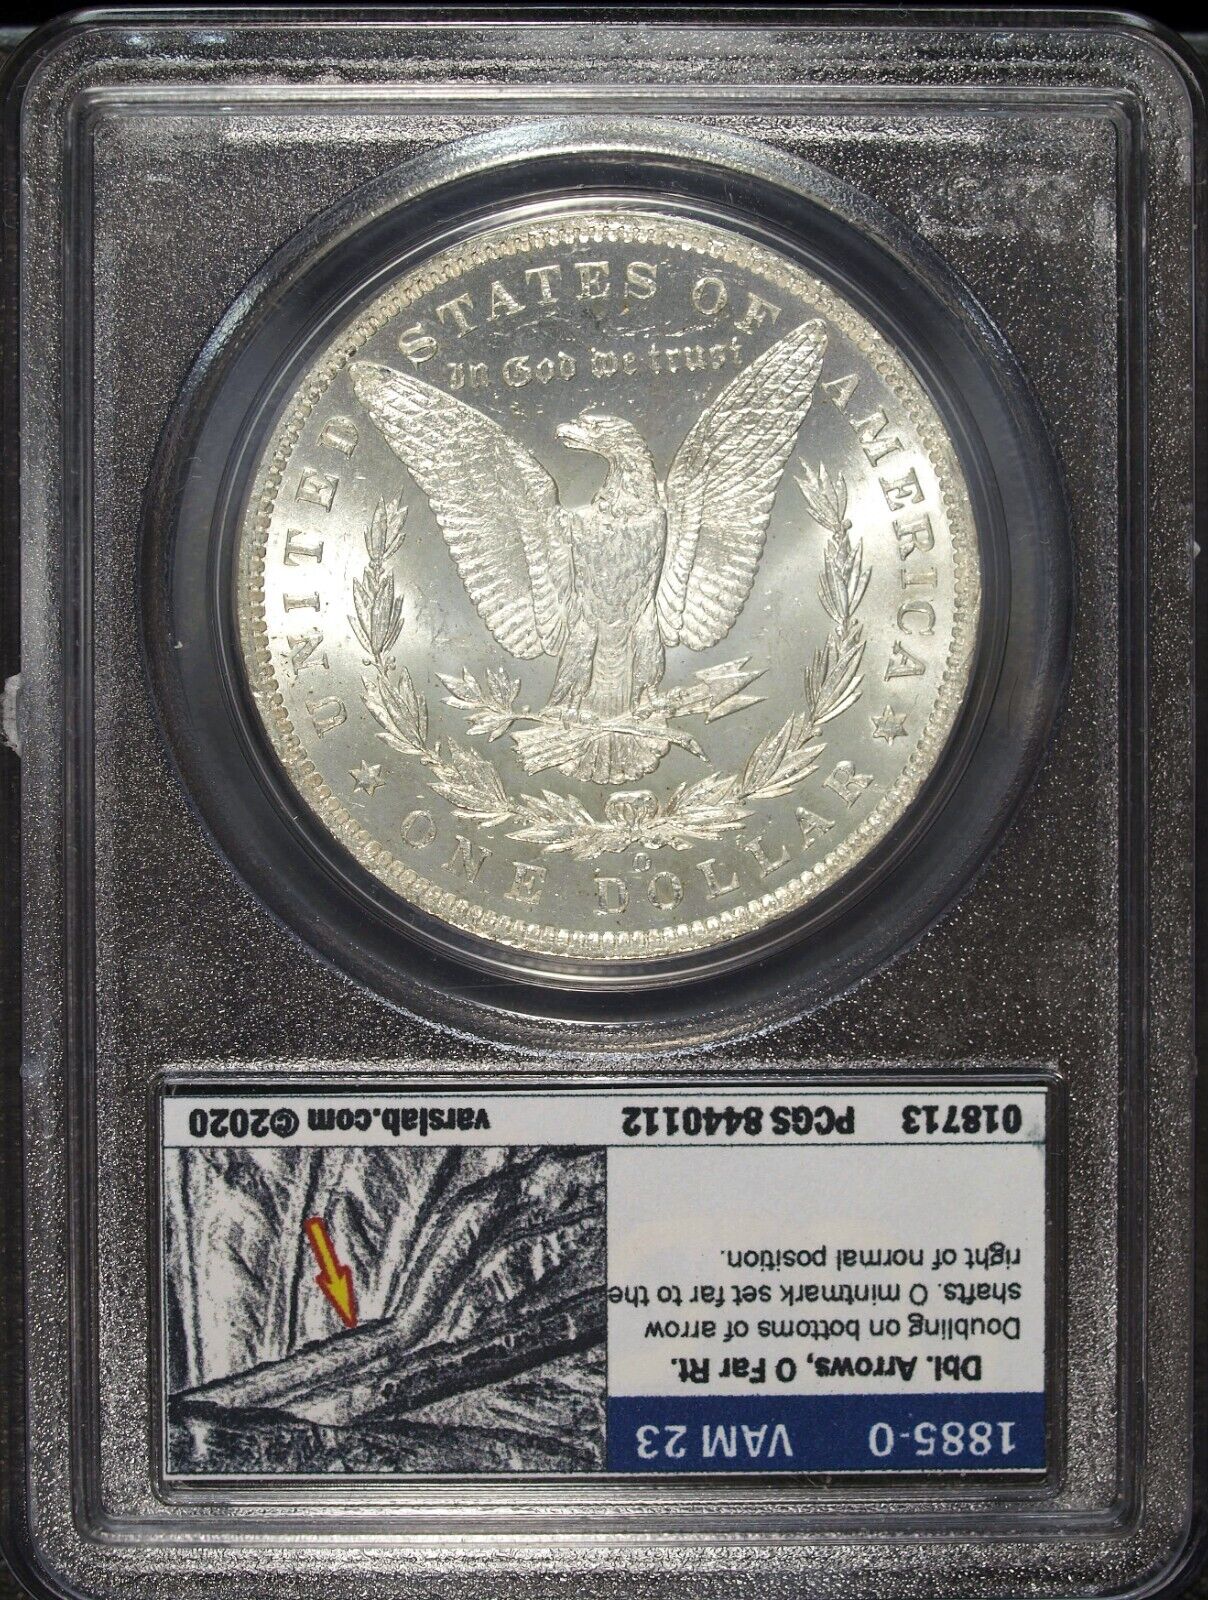 1885 O PCGS MS 64 Morgan Silver Dollar ☆☆ UnCirculated ☆☆ VAM 23 112